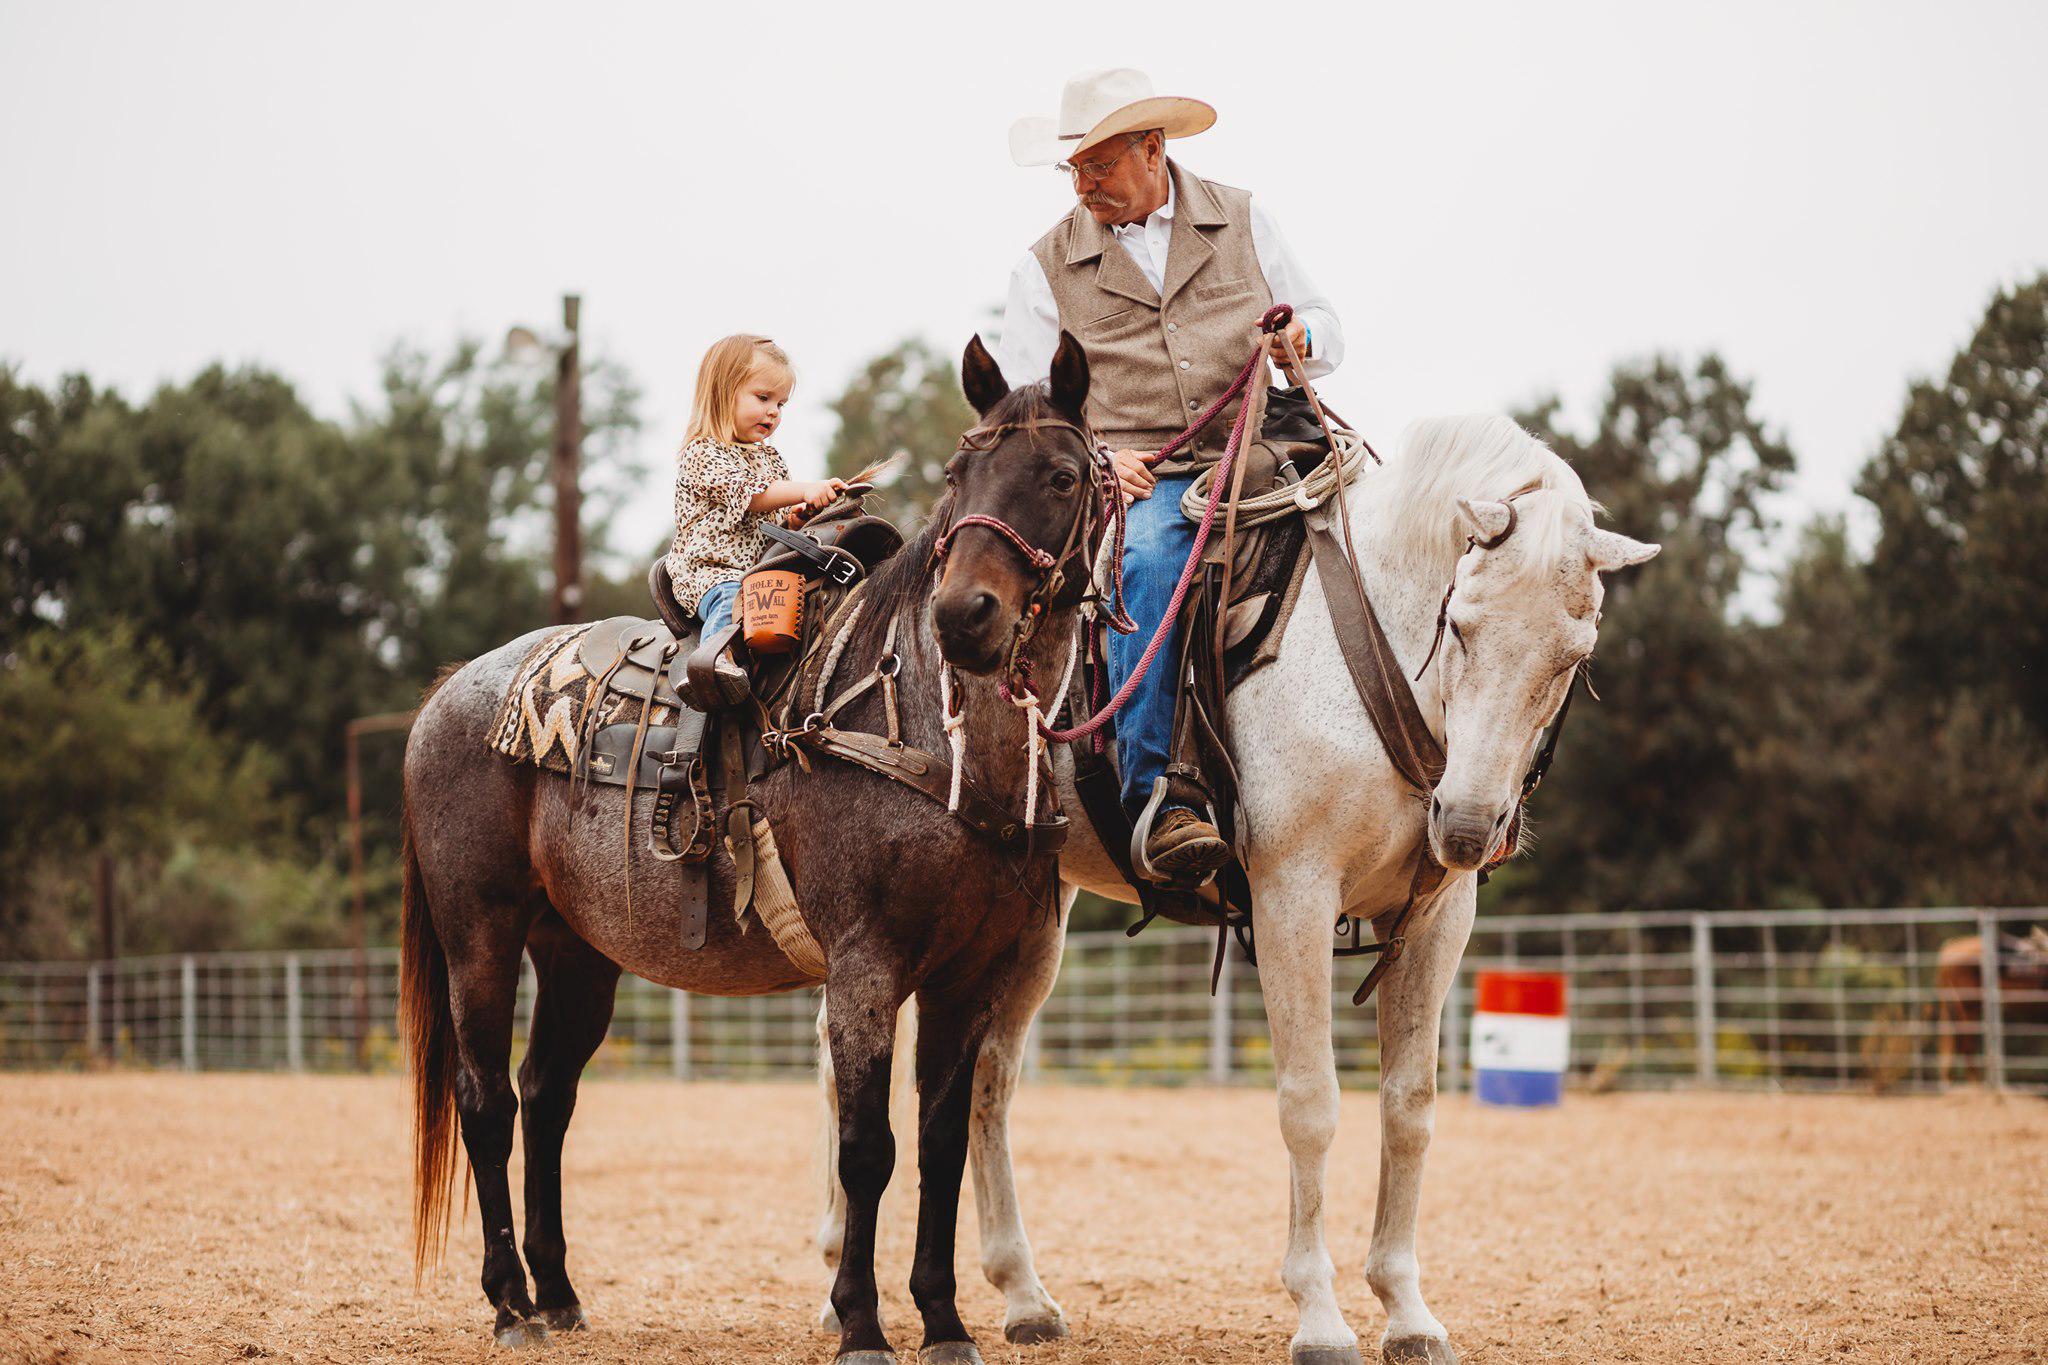 Grandpa and granddaughter on horseback